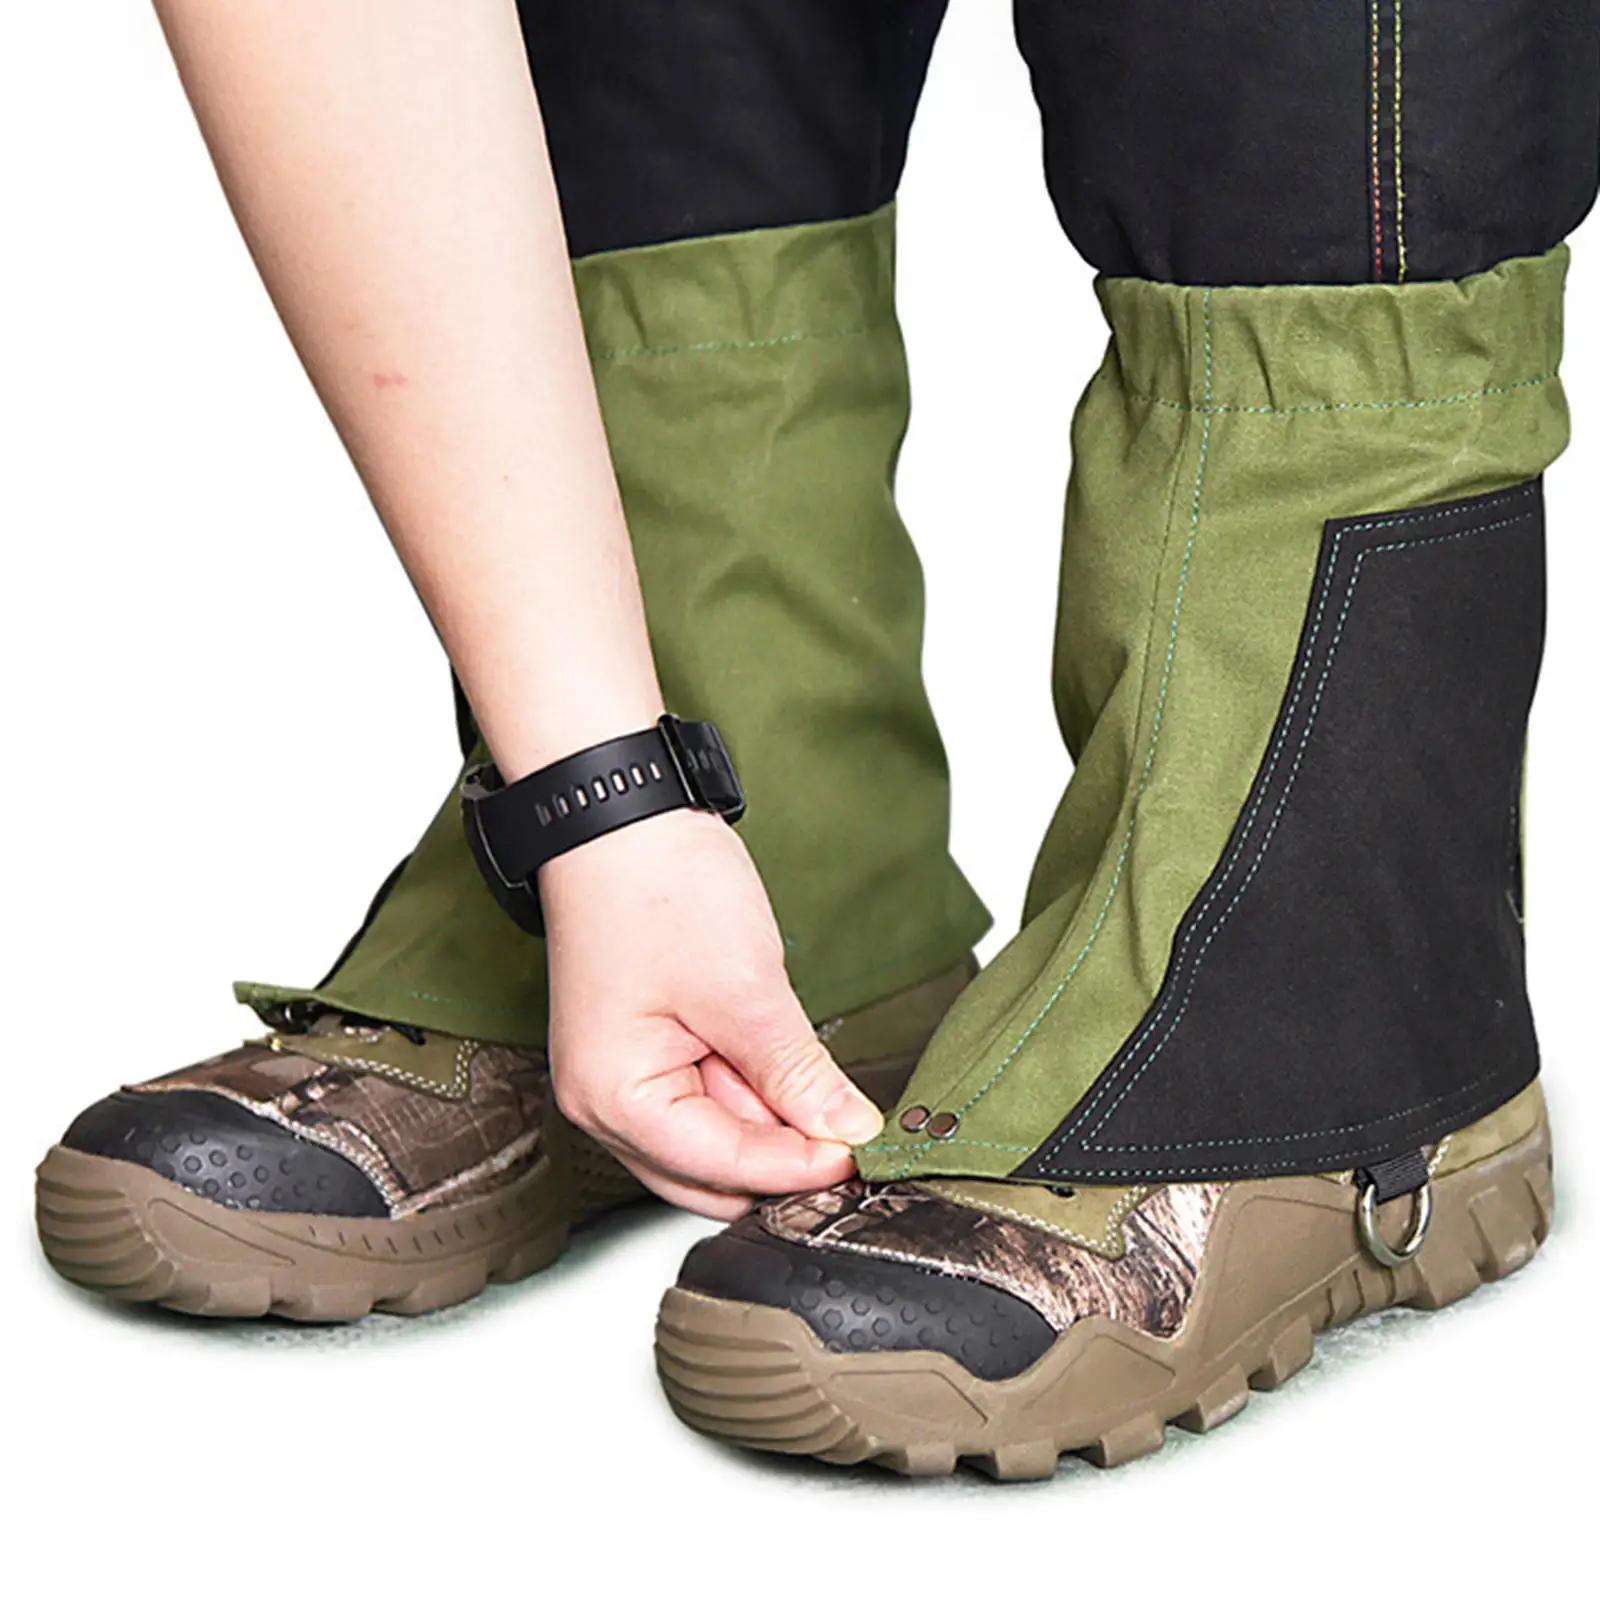 Leg Gaiter Waterproof Snow Boot gaitor Anti-Tear Fabric Leggings Cover Outdoor Fishing Skiing Hiking Leggings